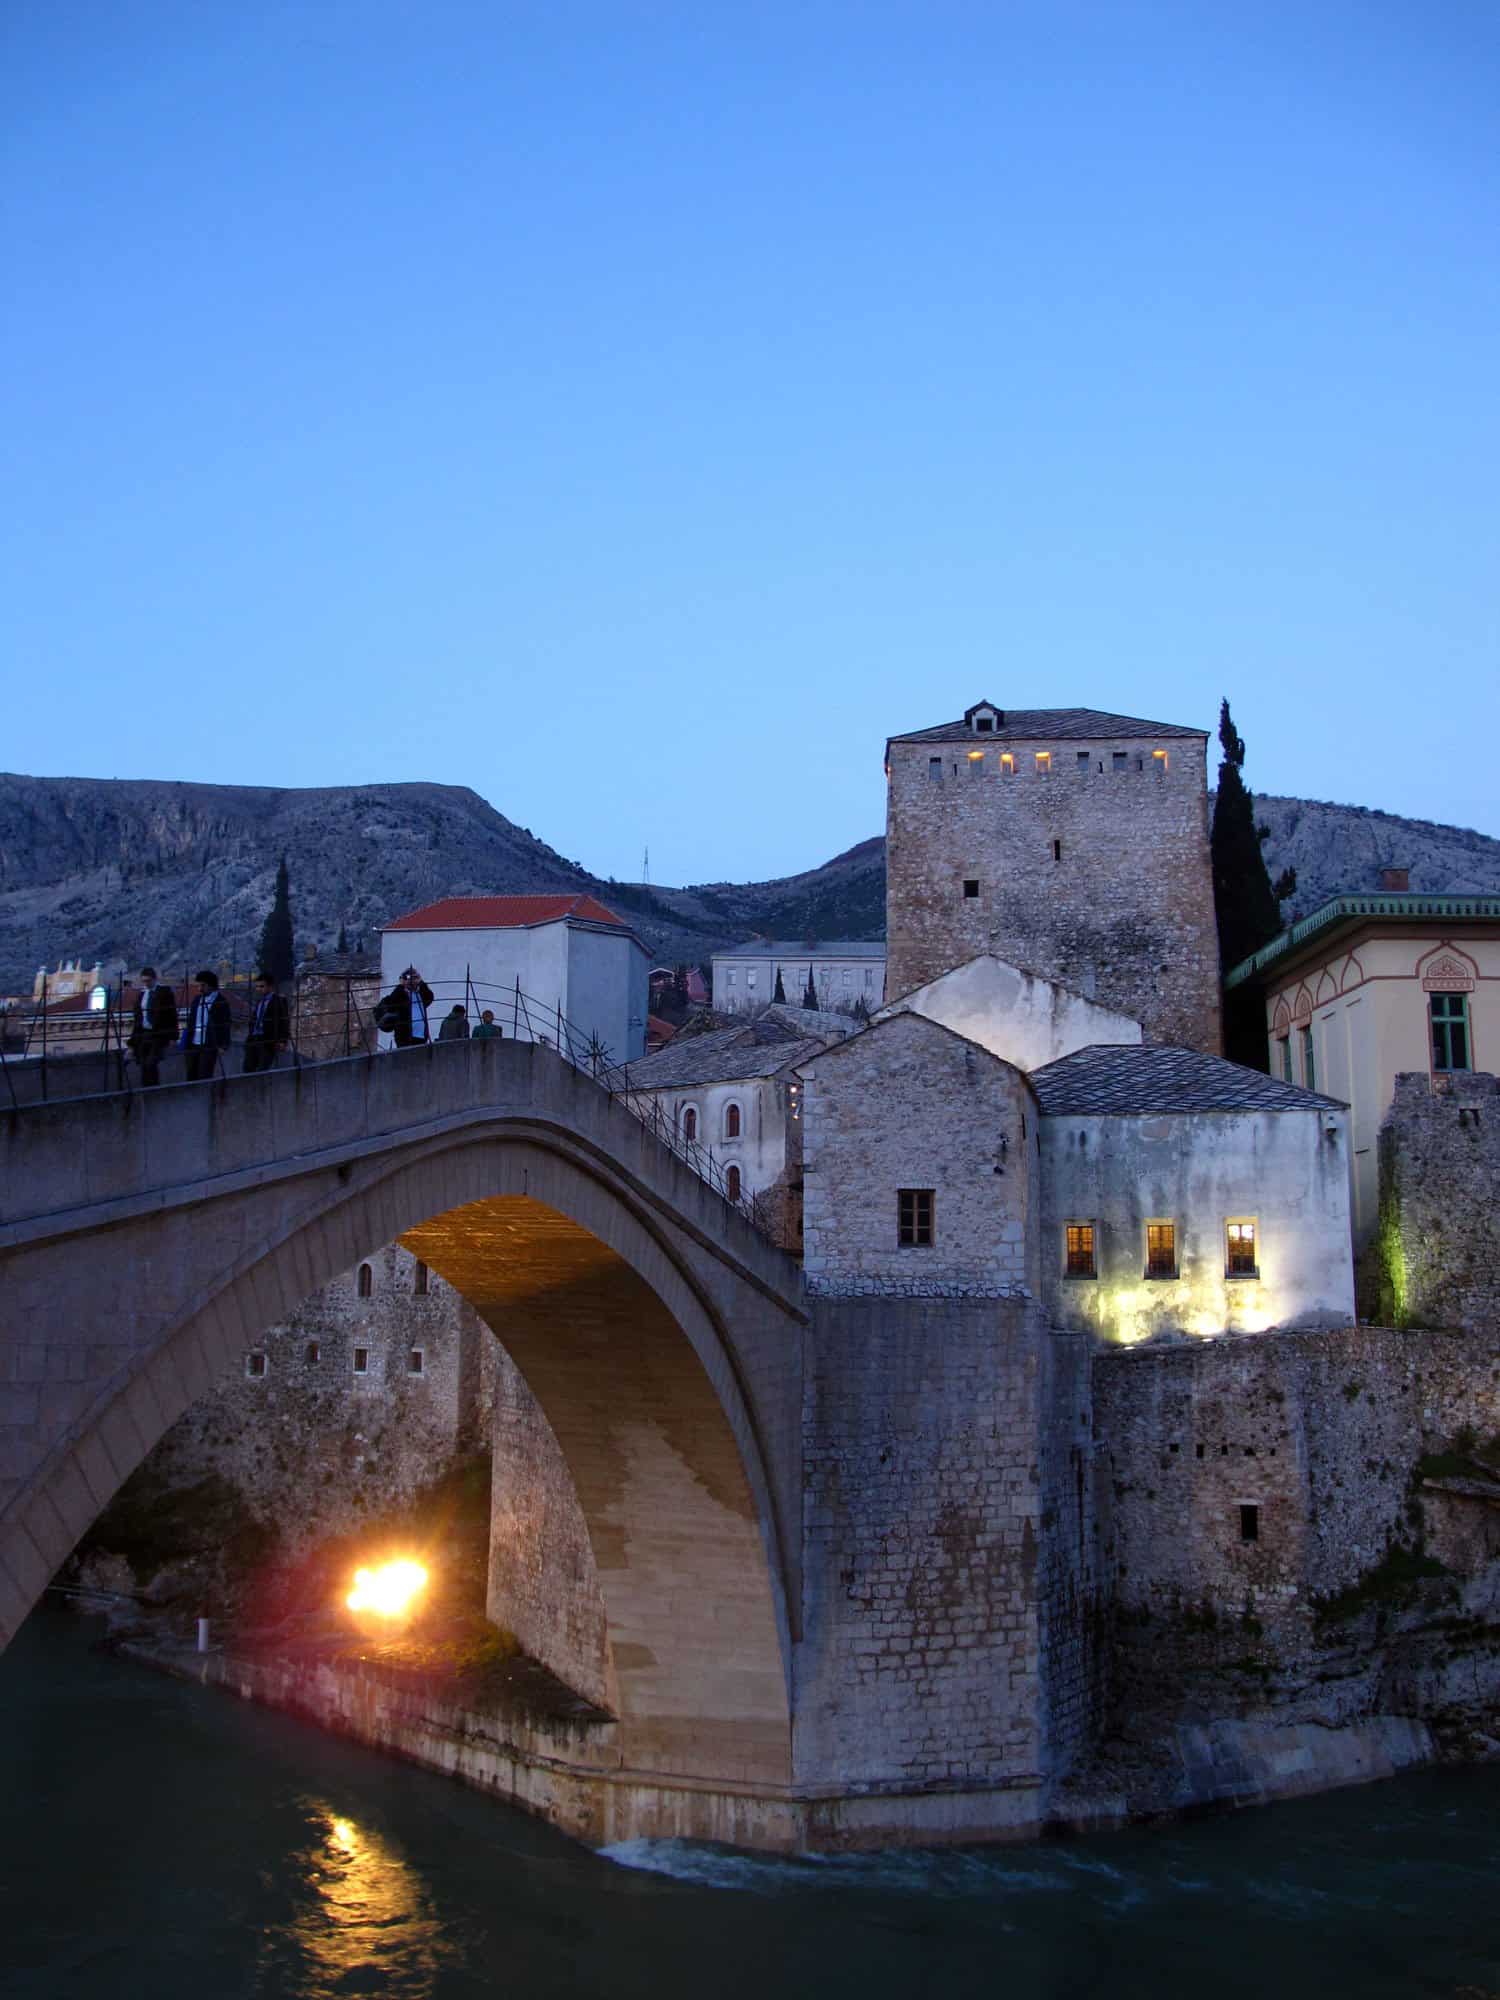 Bigfoottraveller.com l 波黑莫斯塔尔（Mostar），战争的痕迹依然清晰可见